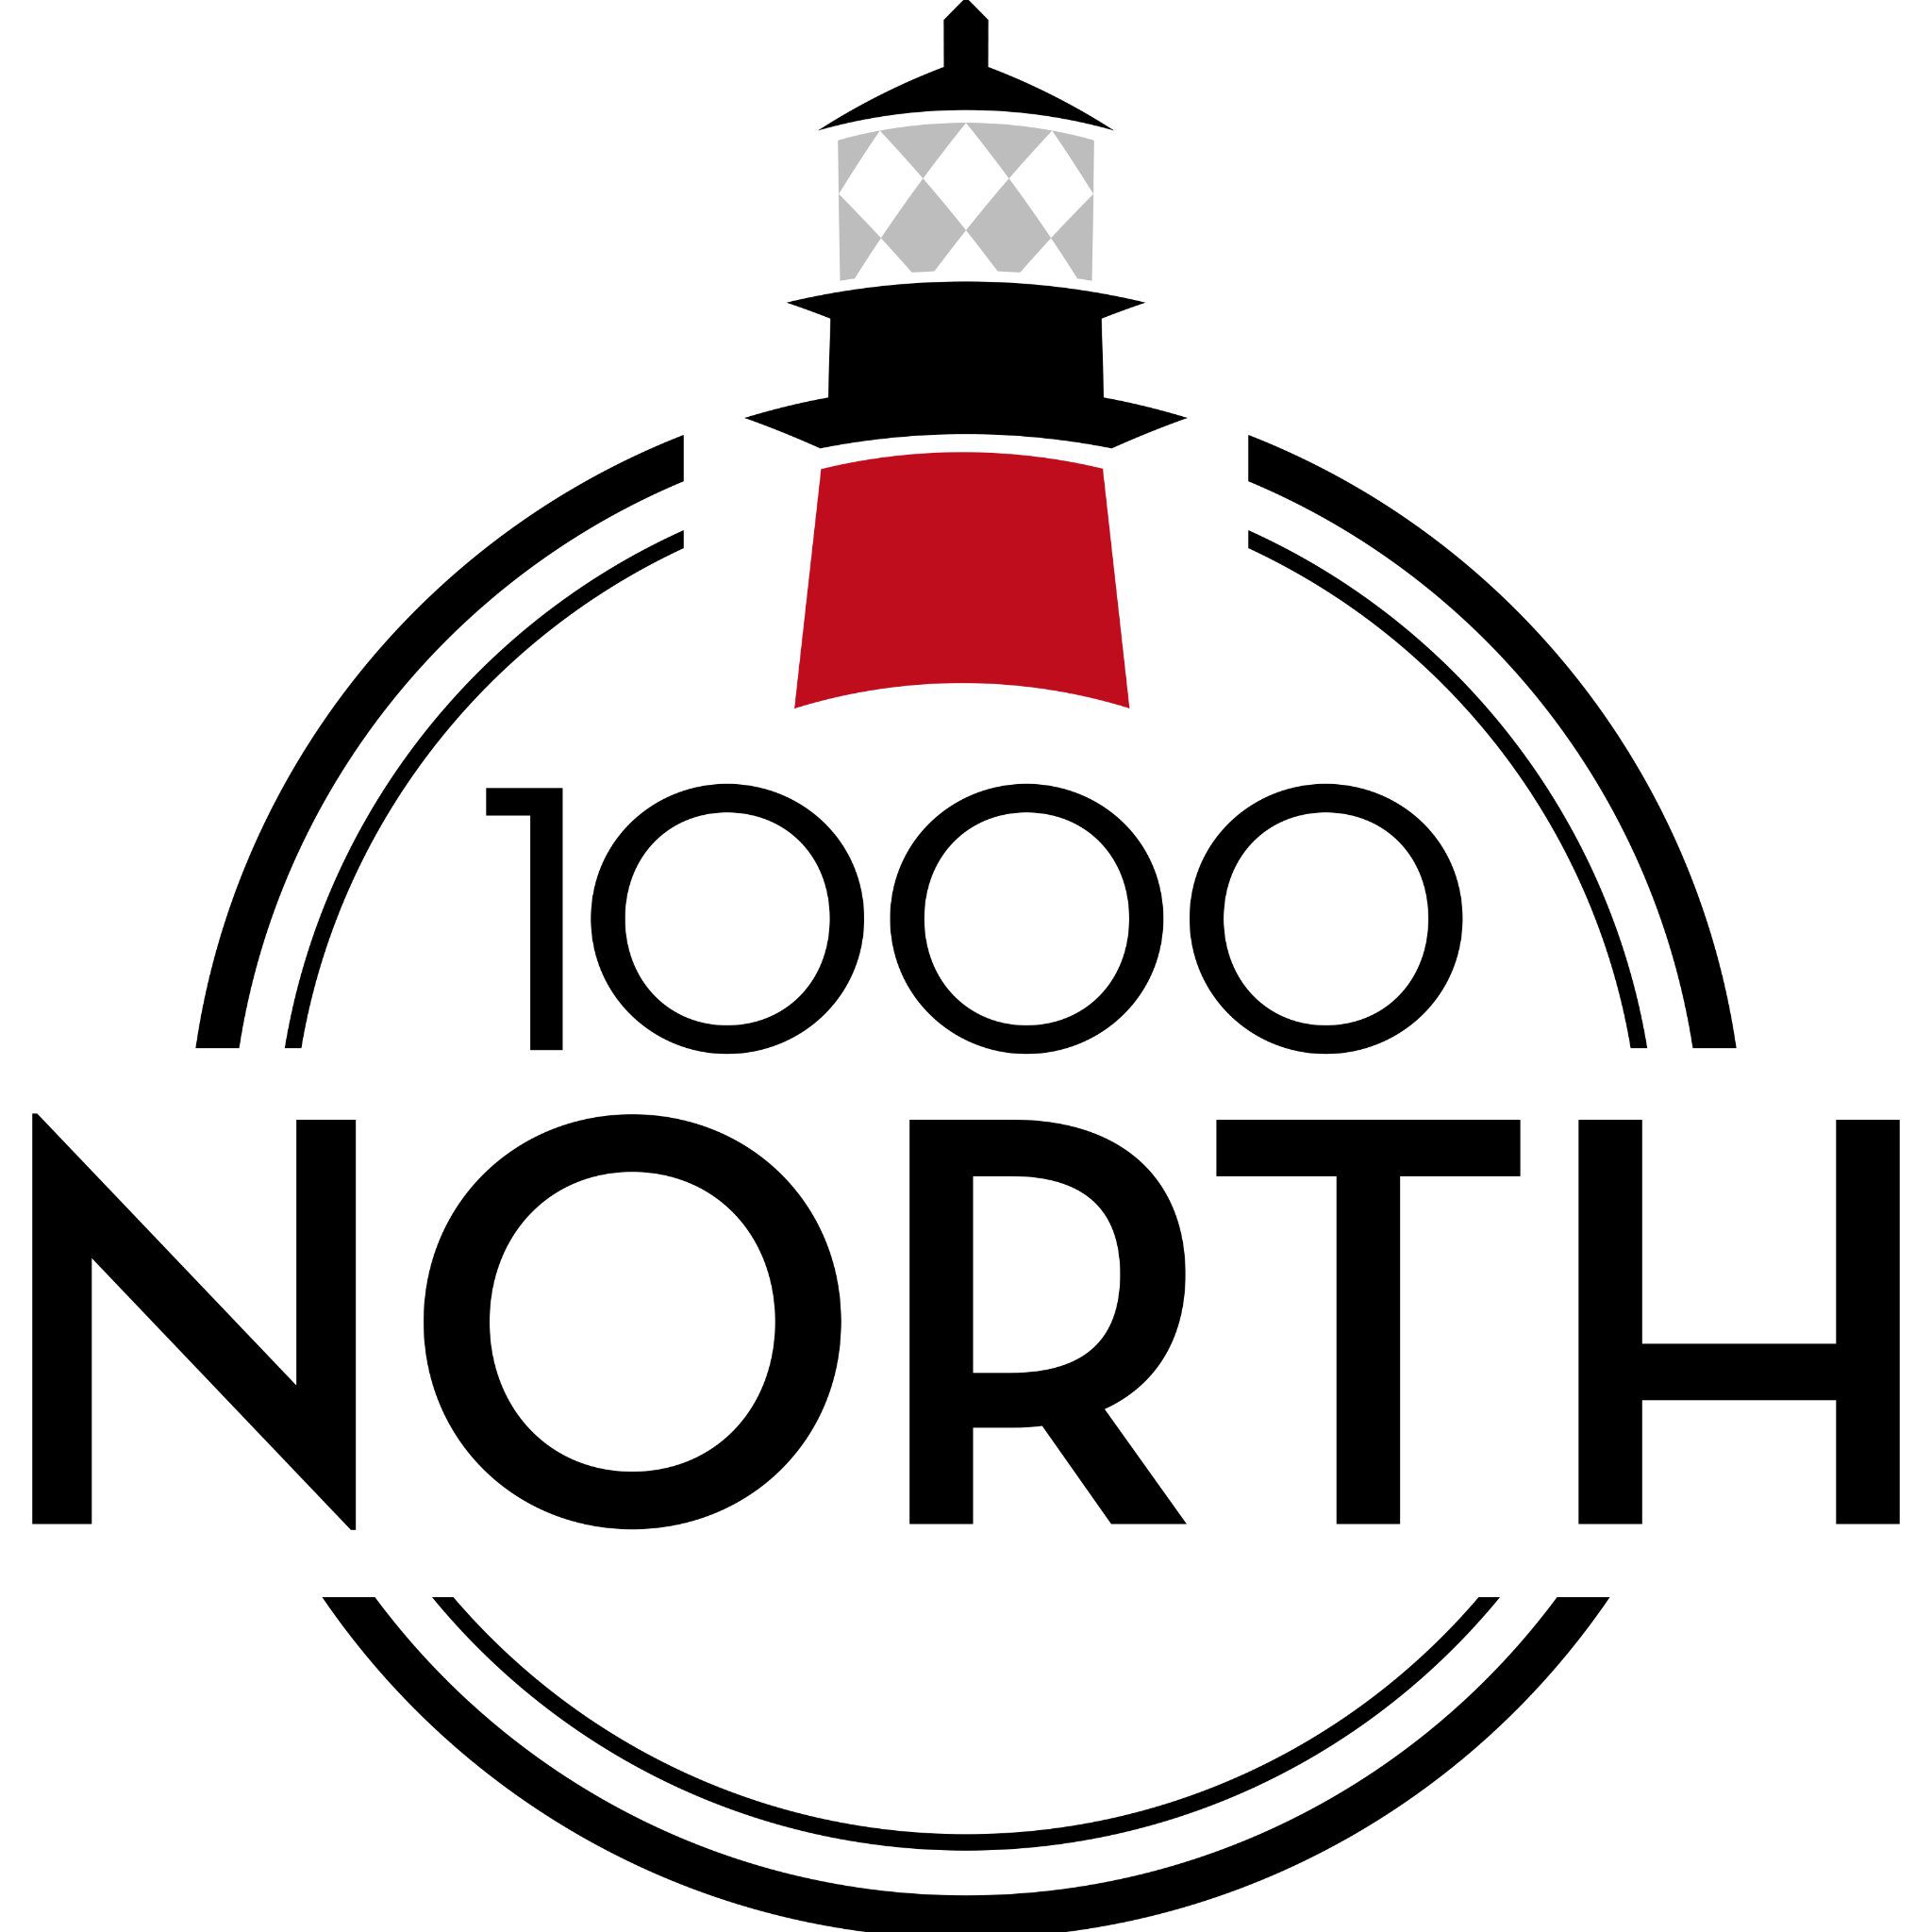 Image result for 1000 north logo